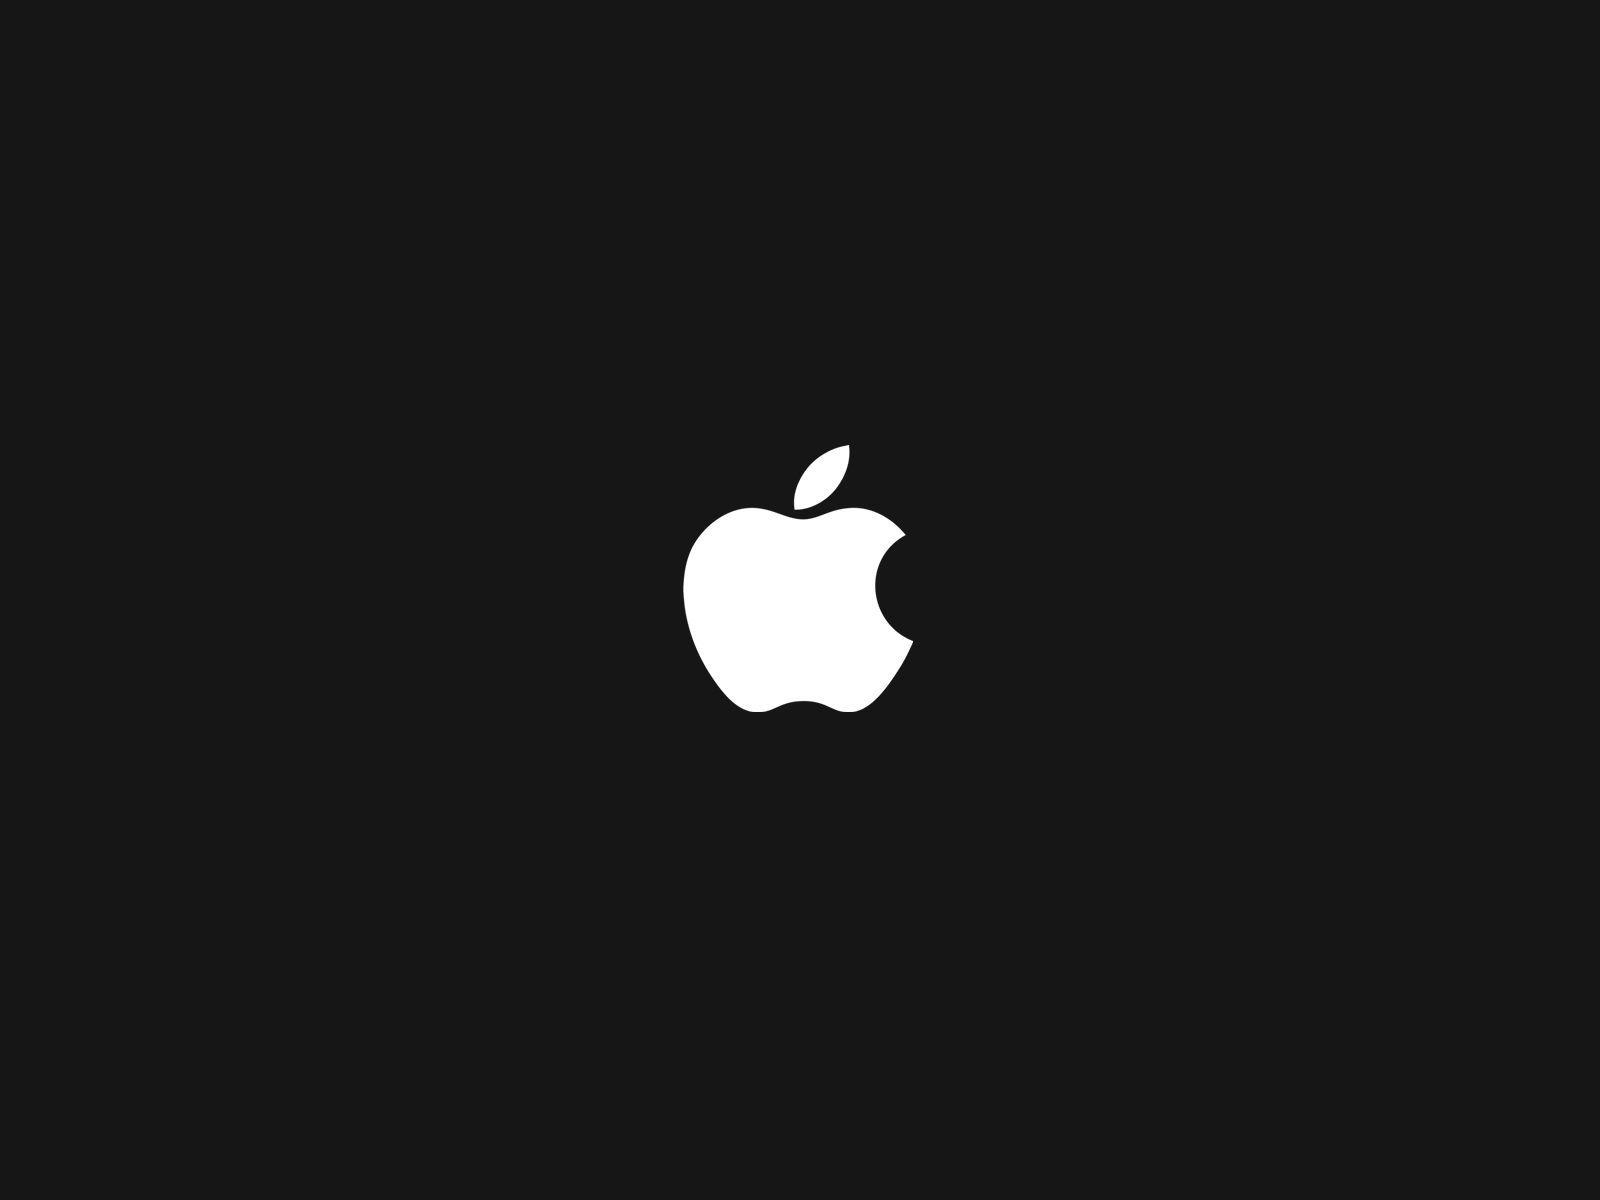 Call Apple Logo - Simple Apple Logo Background 1.600×1.200 Pixel. Apple